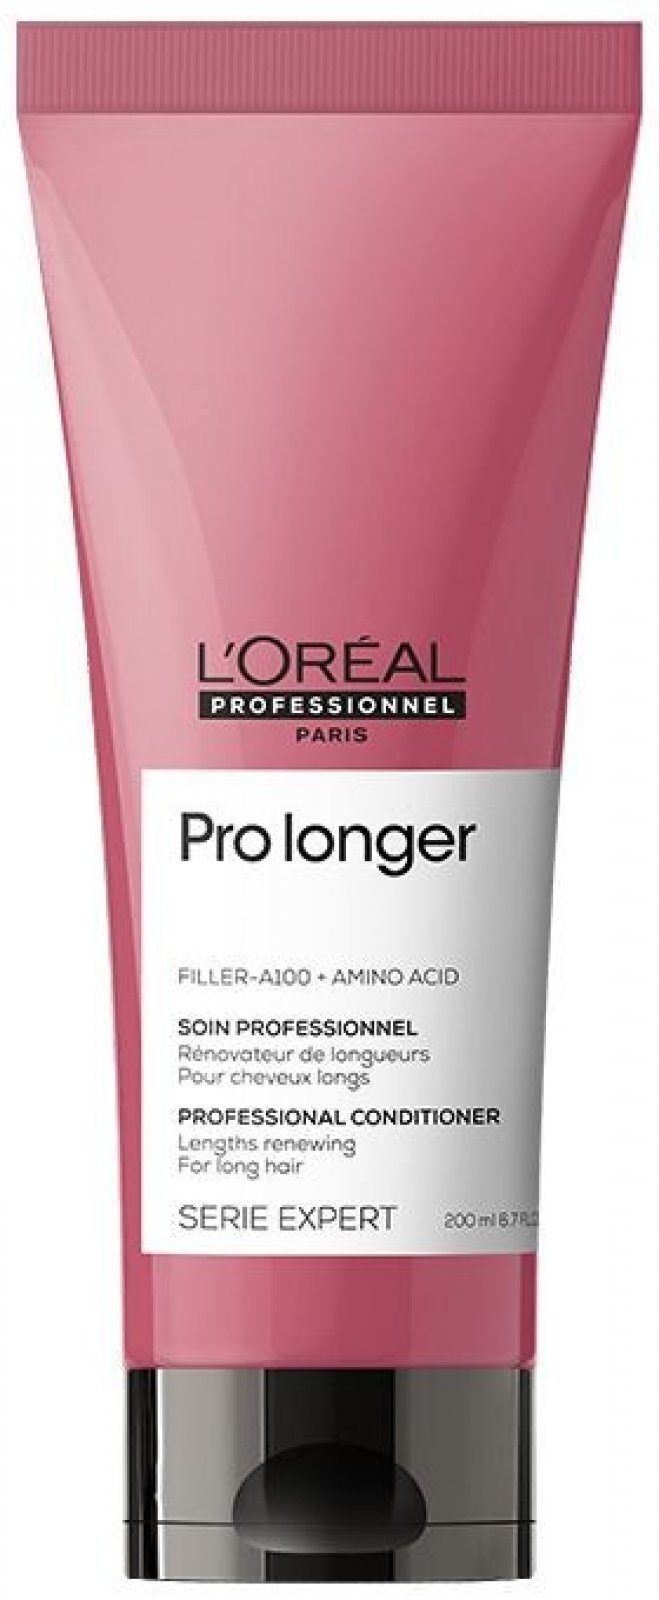 L'Oréal L’Oréal Expert Pro Longer, posilující kondicionér, 200 ml